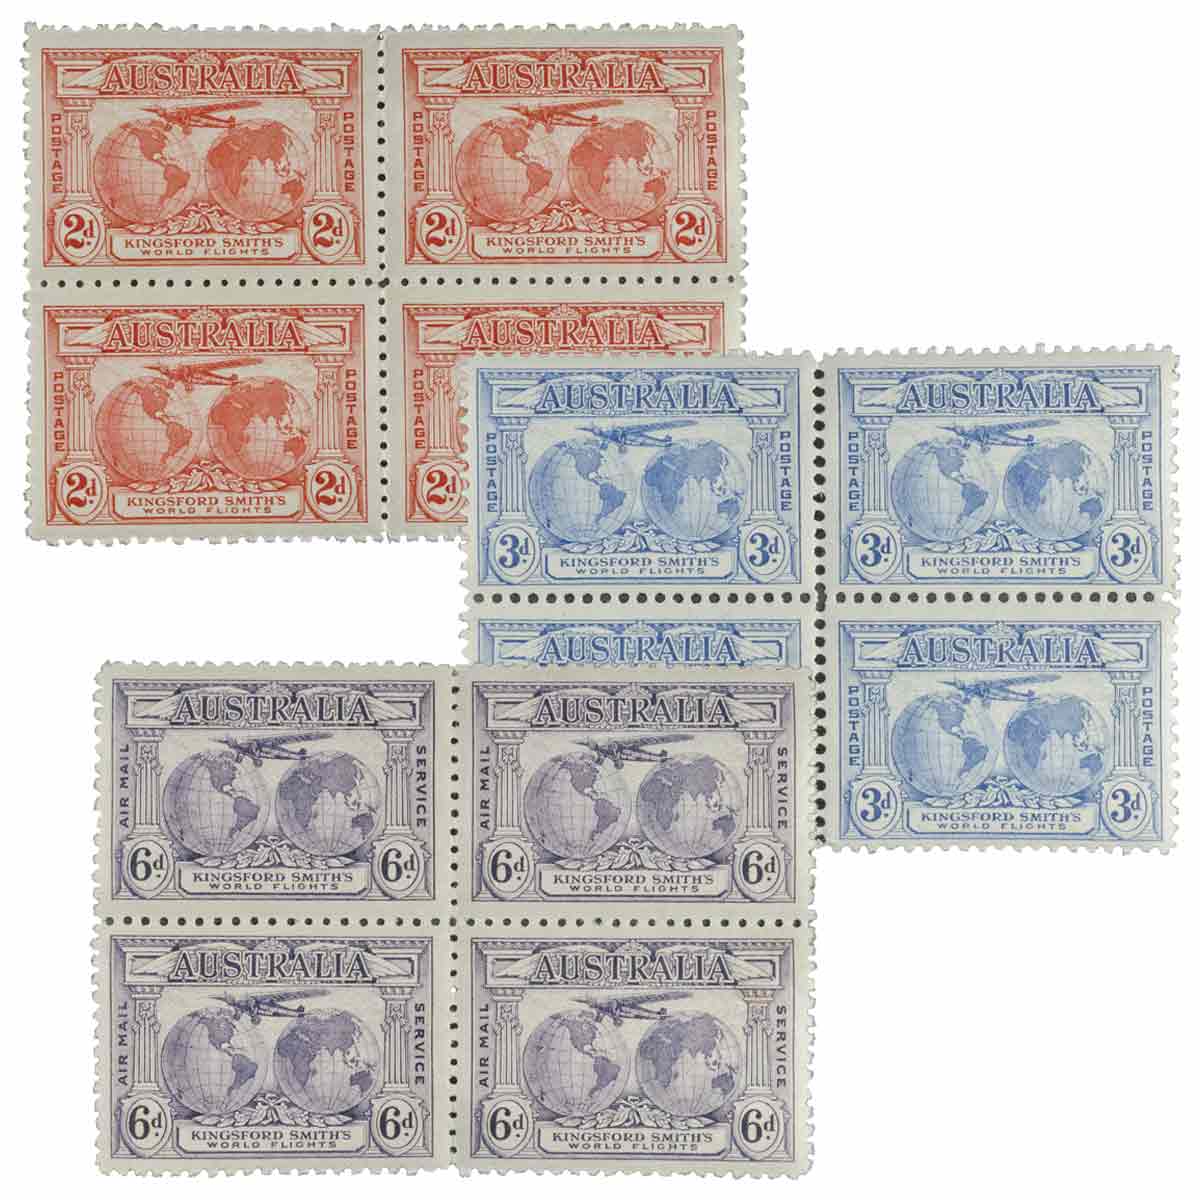 1931 Kingford Smith World Flight Blocks of 4 set of 3 MUH (12 stamps)